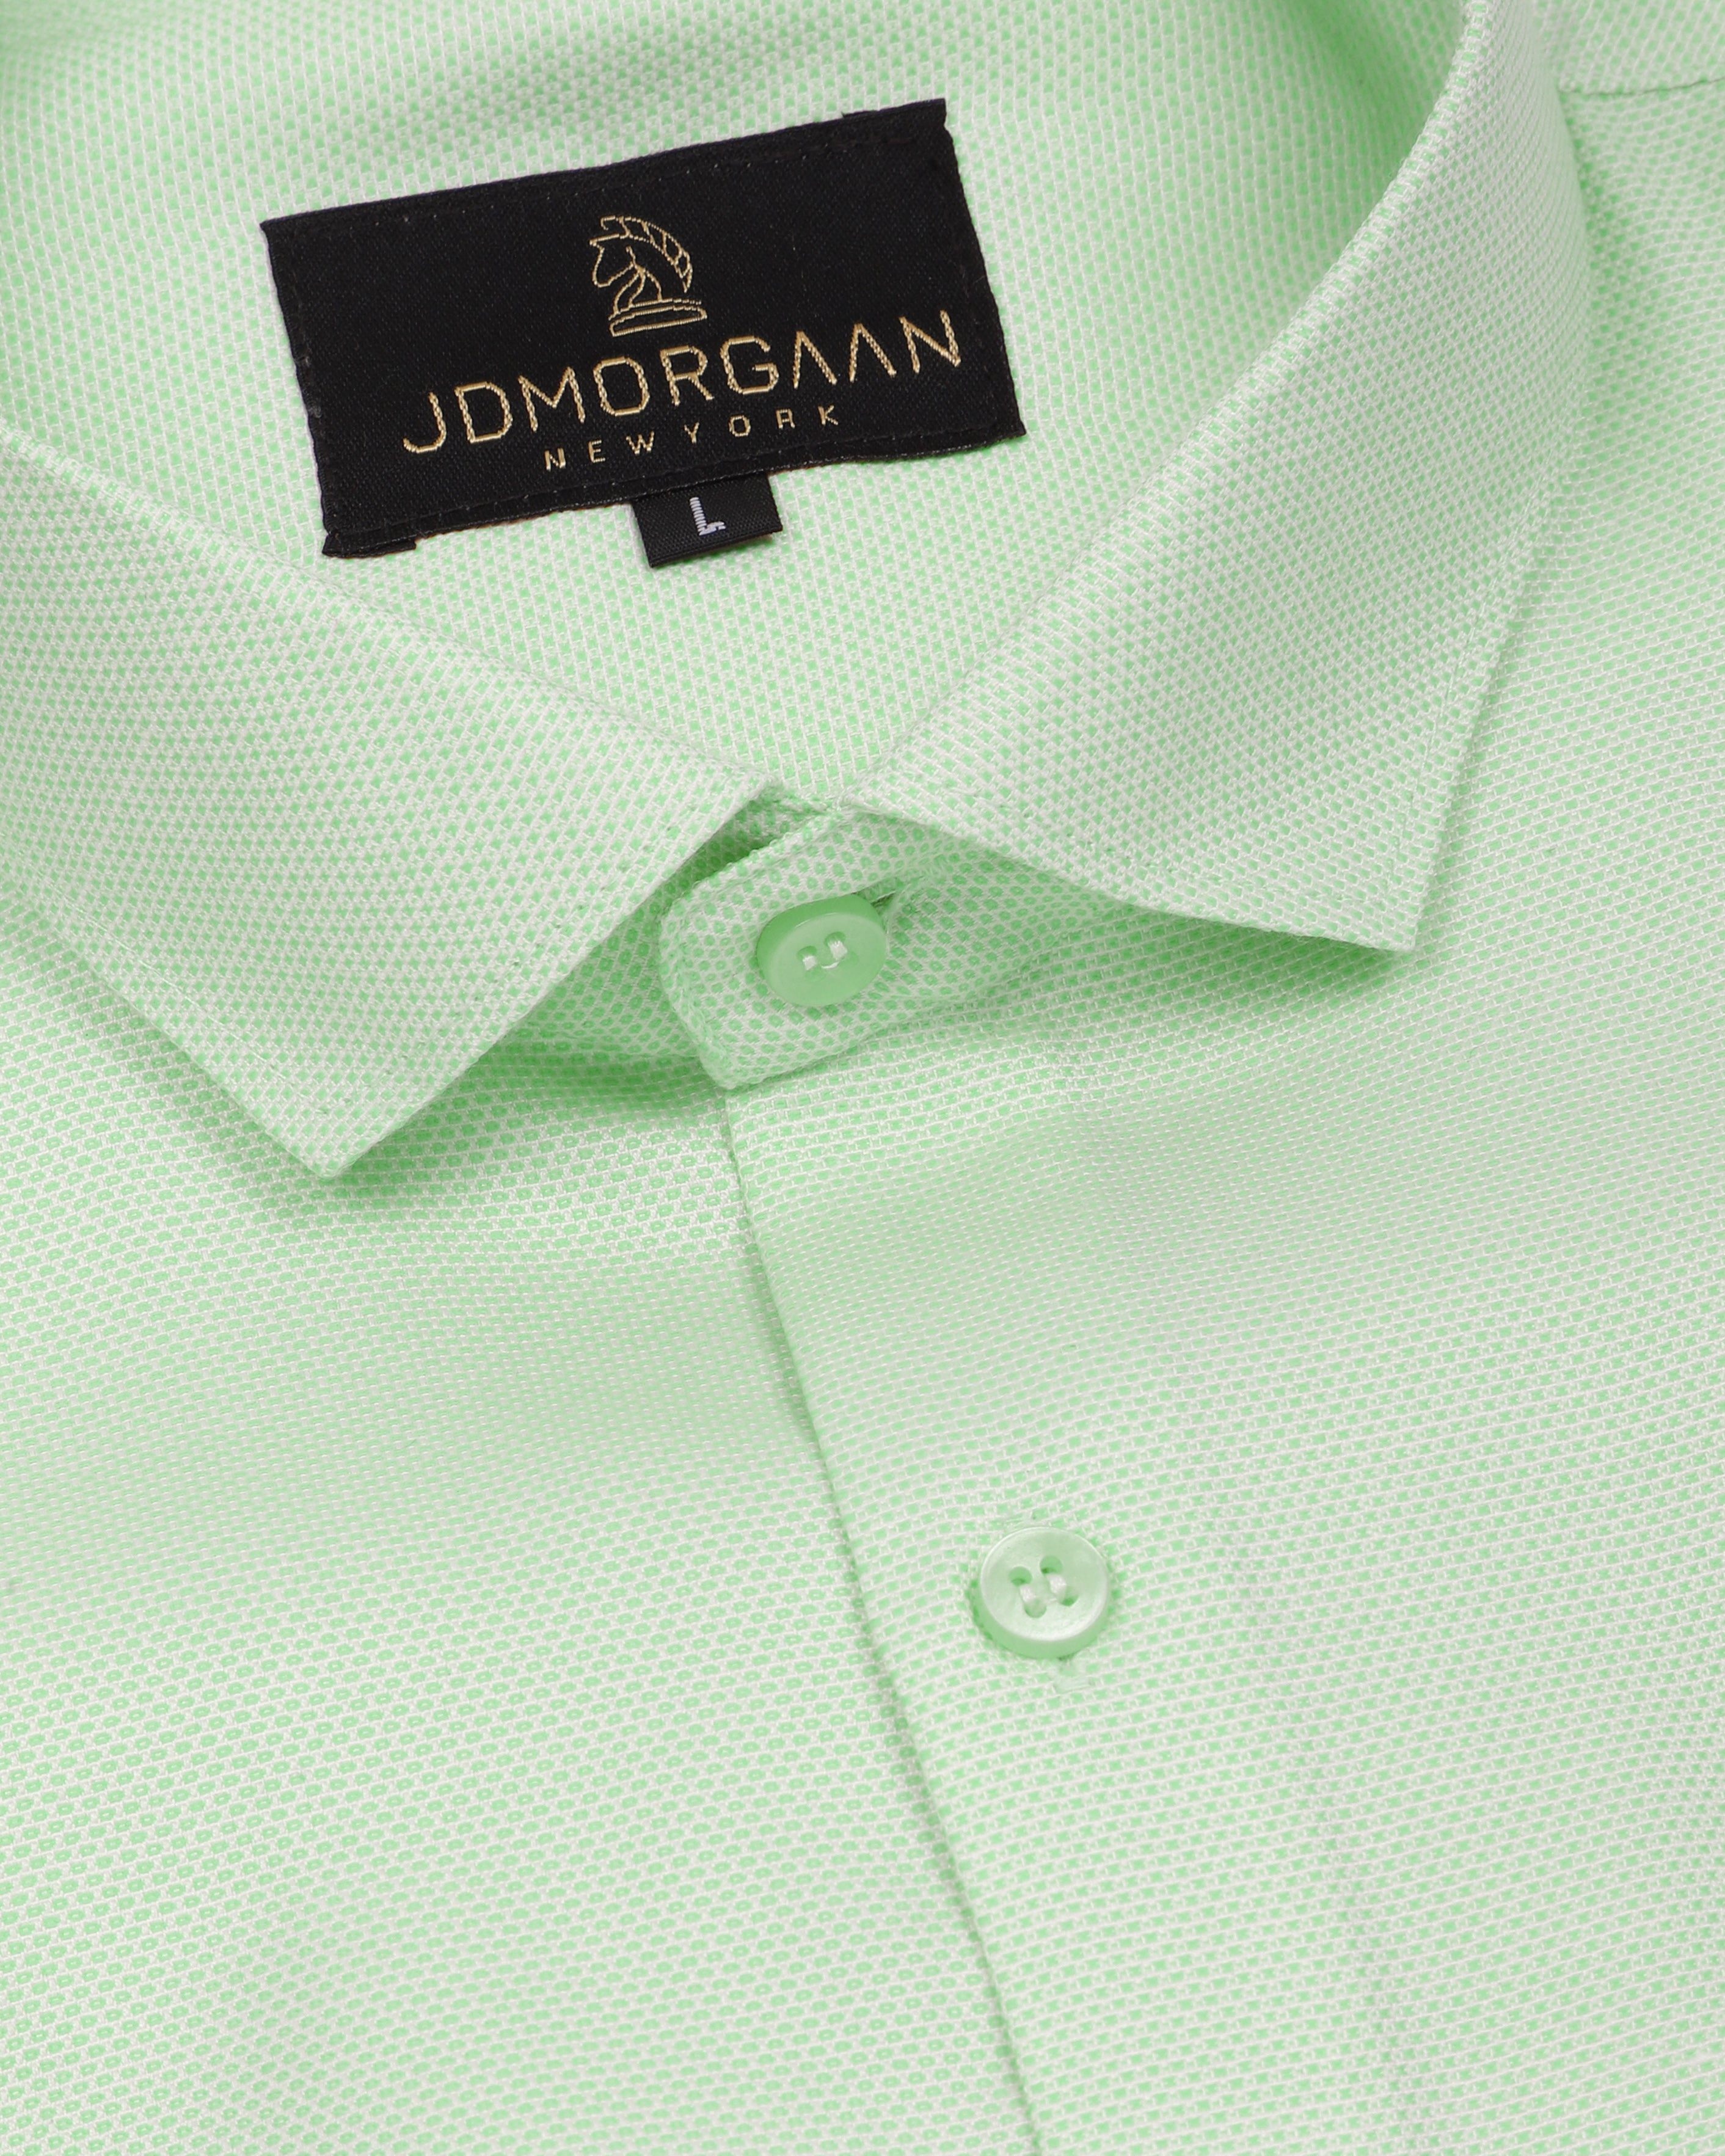 Light Green Dobby Textured Color Premium Cotton Shirt